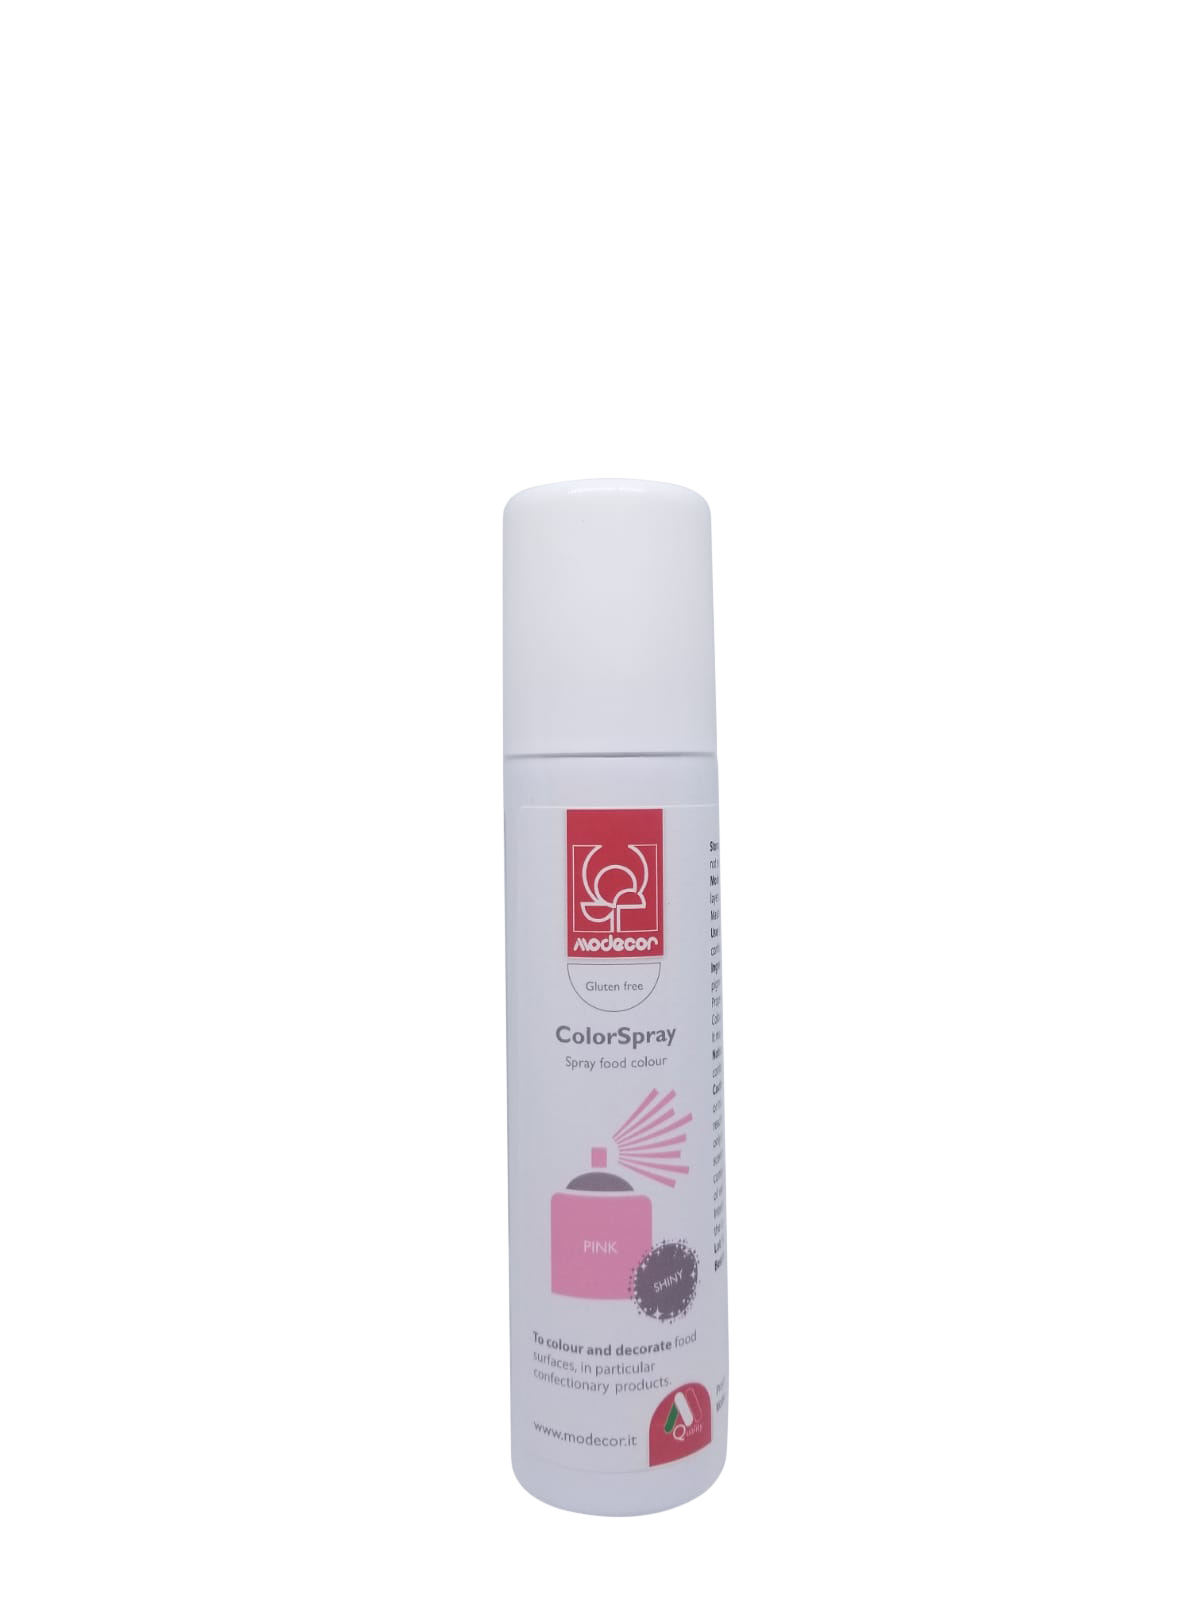 Modecor Shiny Pink Spray 3.4 oz